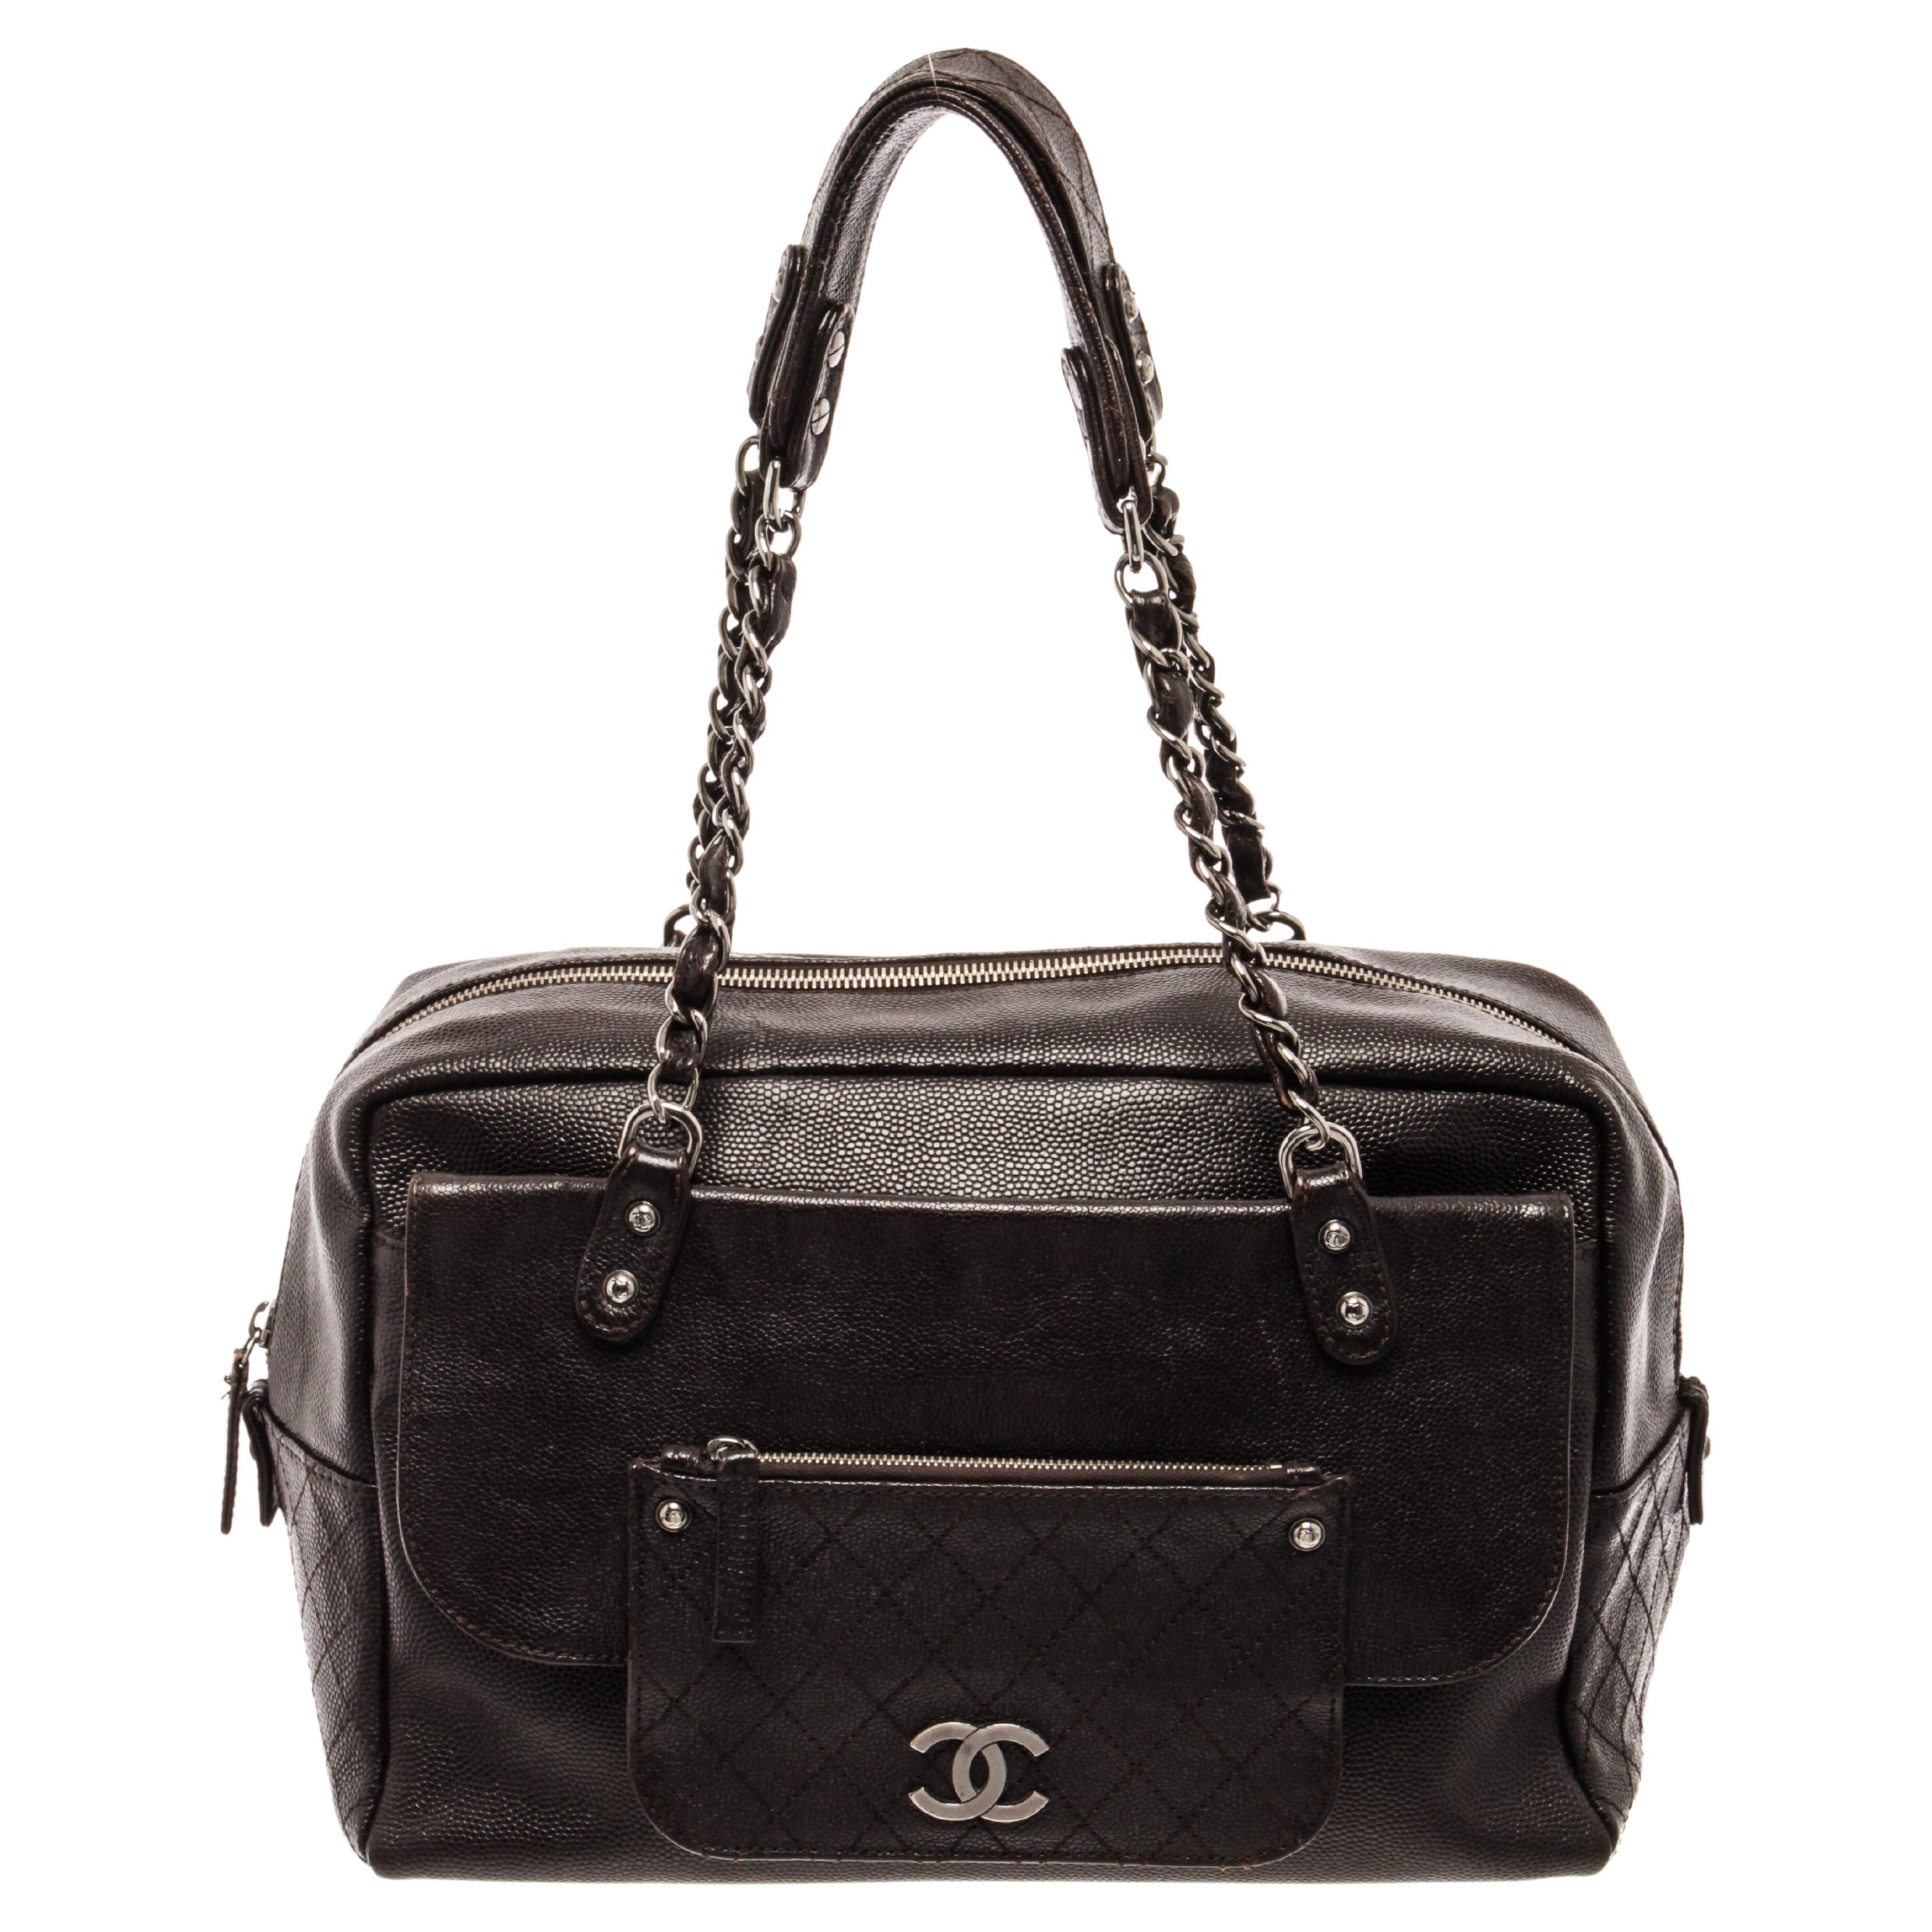 Chanel Black Caviar Leather City Flap Shoulder Bag